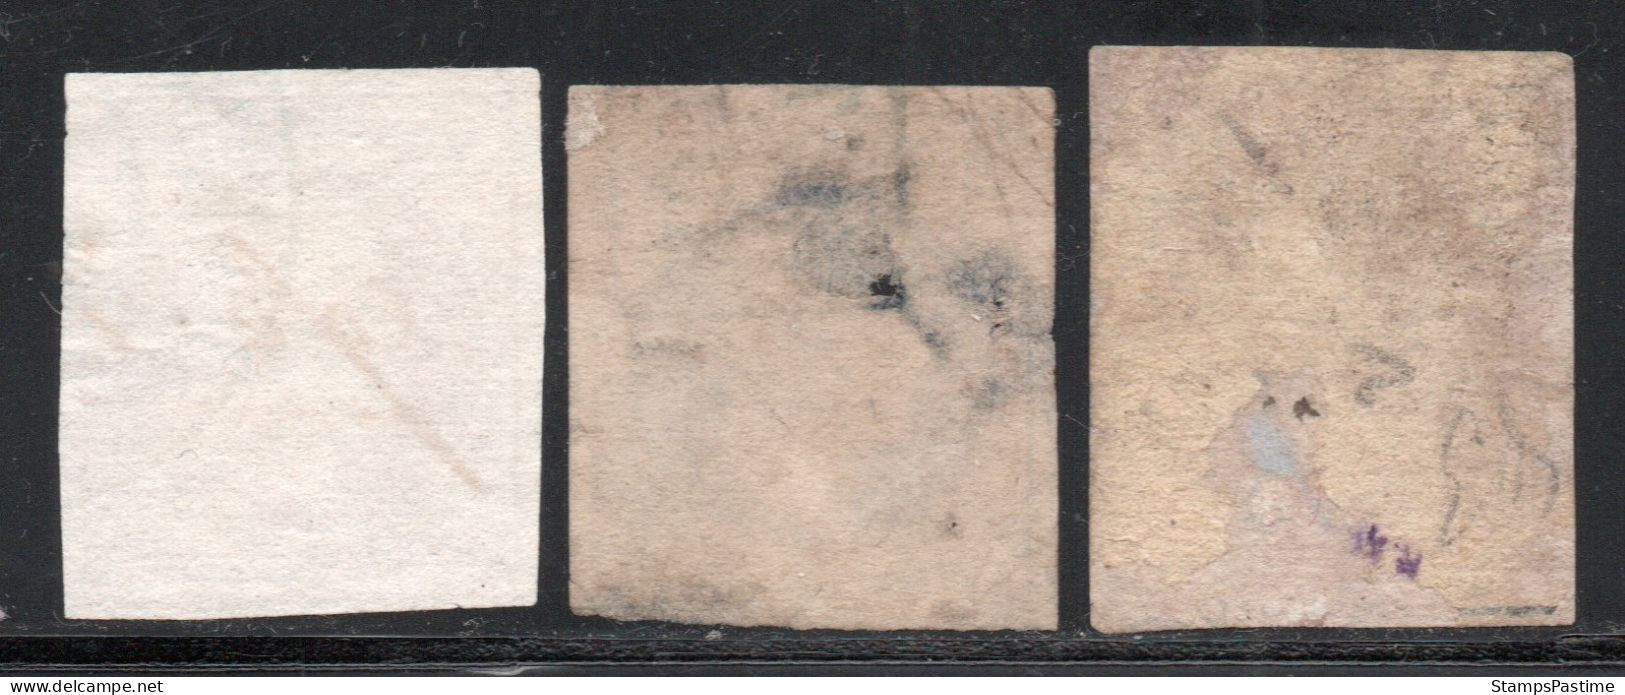 HANOVRE - HANNOVER (ALEMANIA) Serie X 3 Sellos Usados REY GEORGE V Años 1859-61 – Valorizada En Catálogo € 138,00 - Hanover